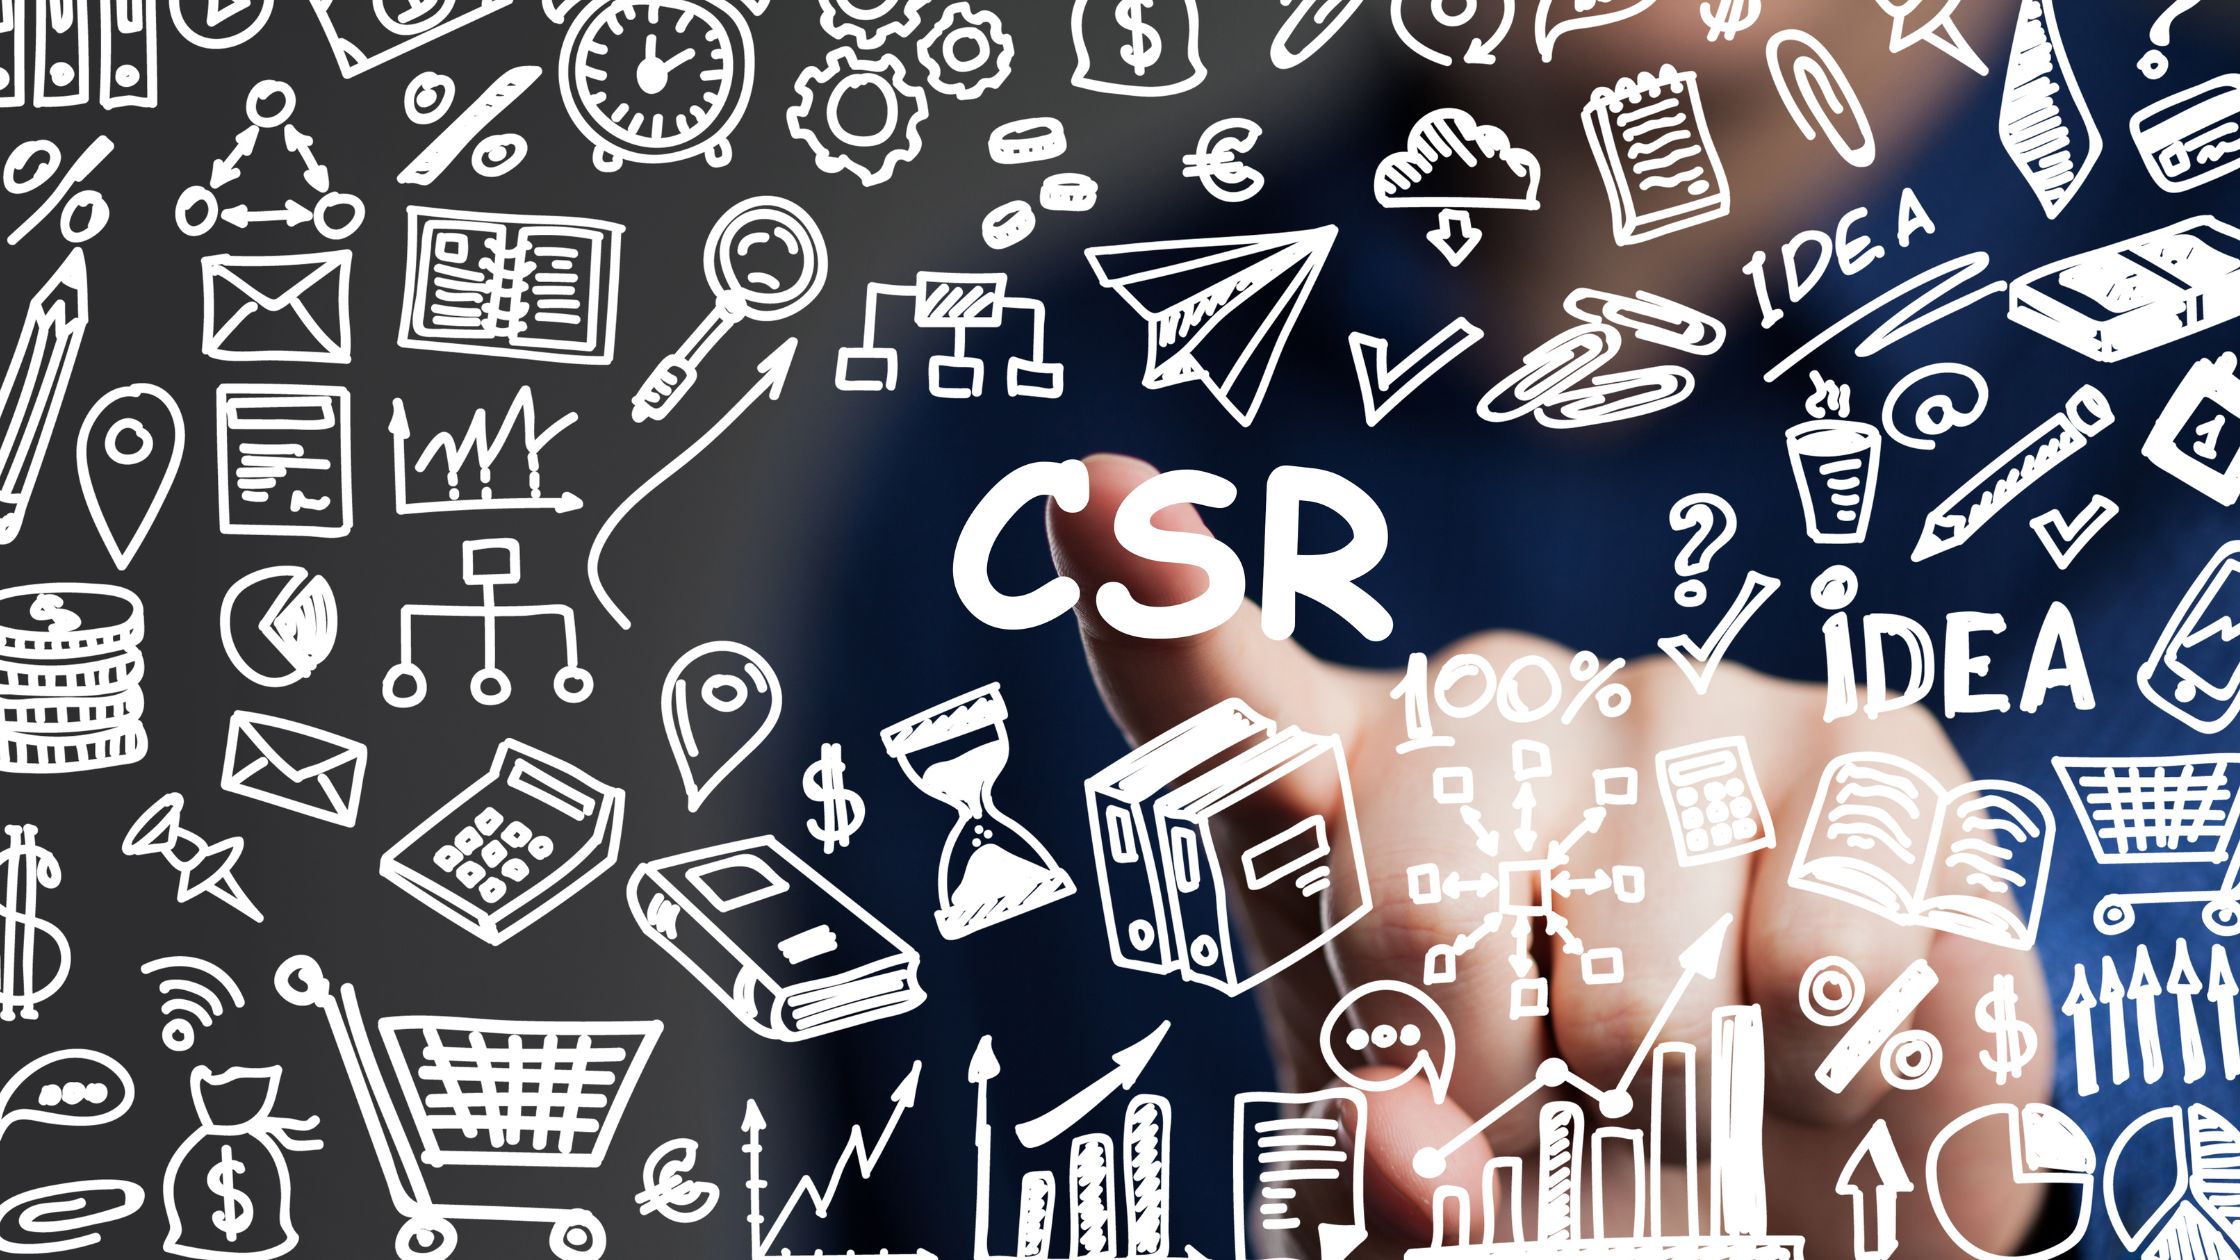 CSR Benefits